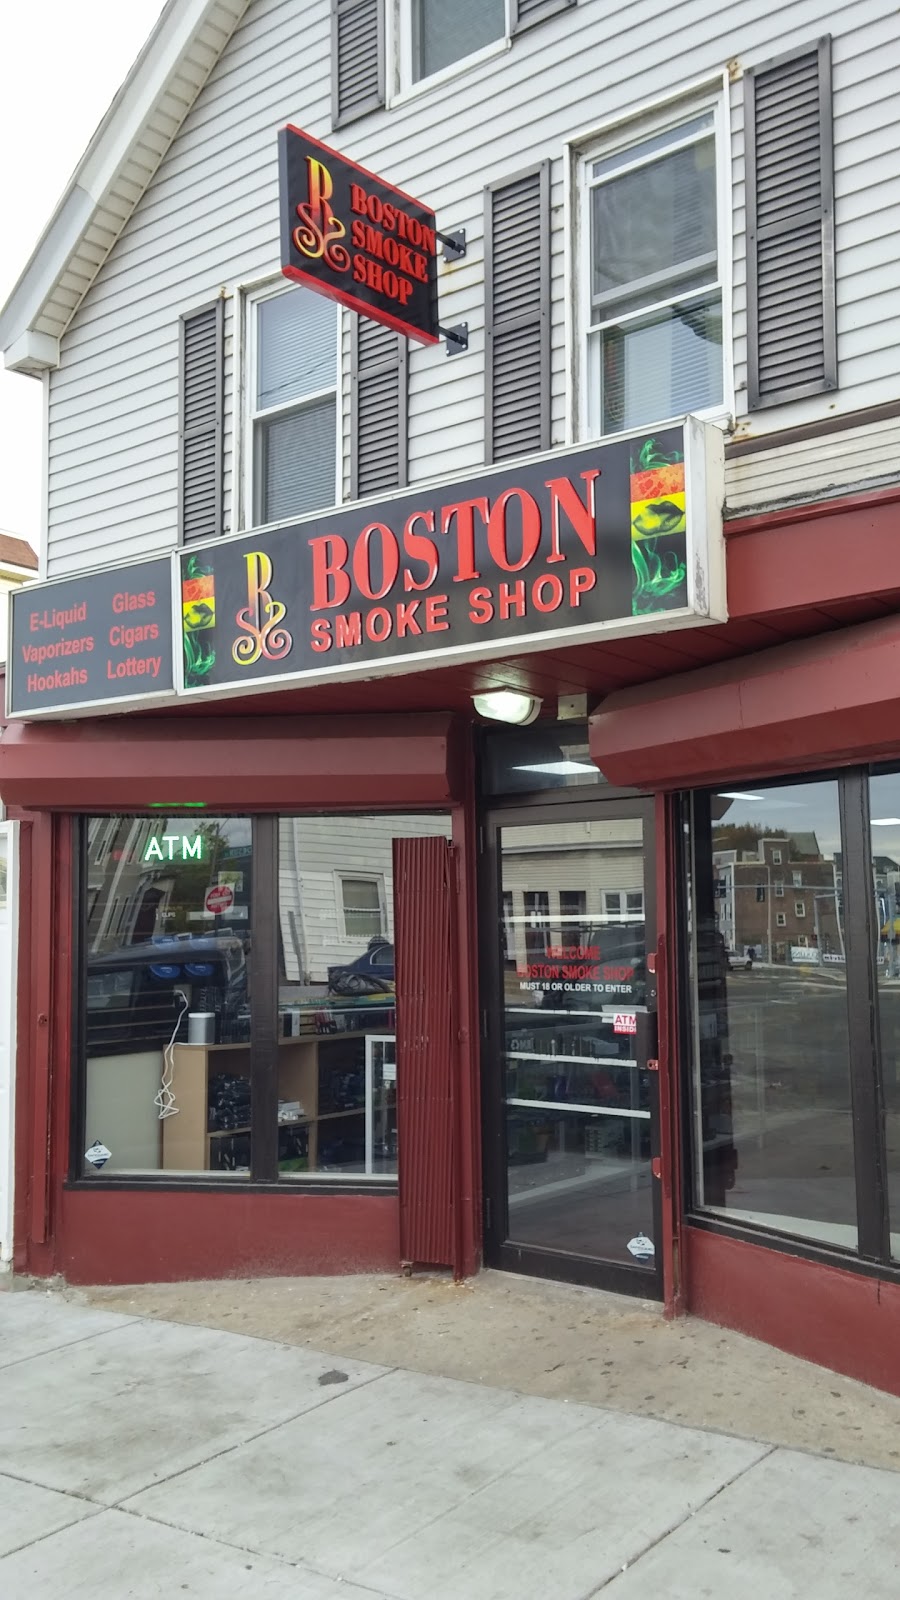 Boston Smoke Shop: Water Pipes, Vaporizers